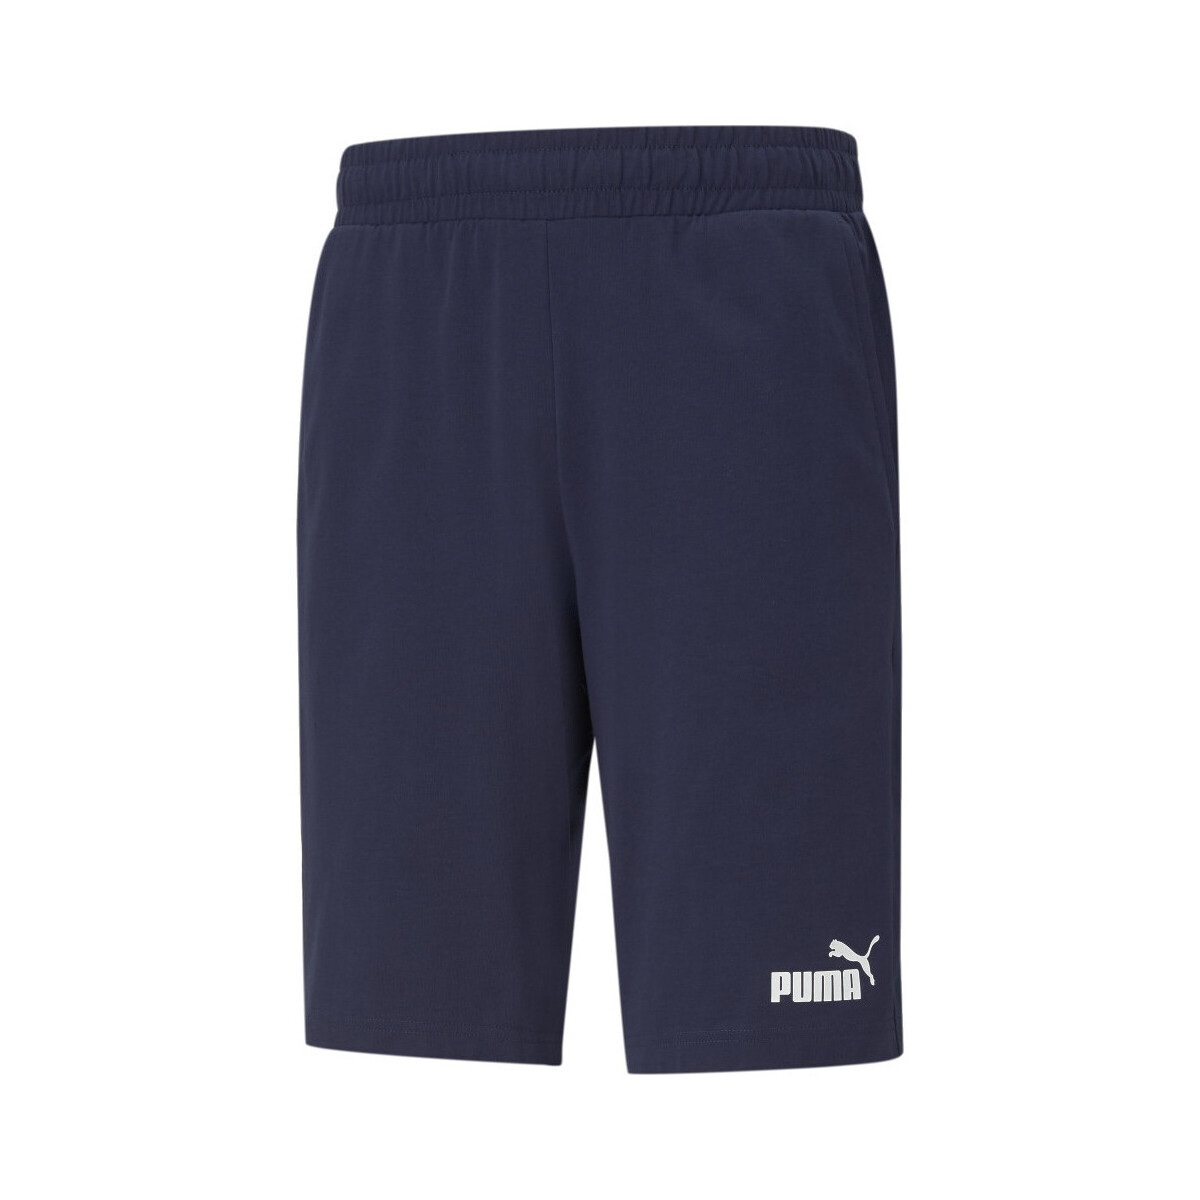 Kleidung Herren Shorts / Bermudas Puma 586706-06 Blau